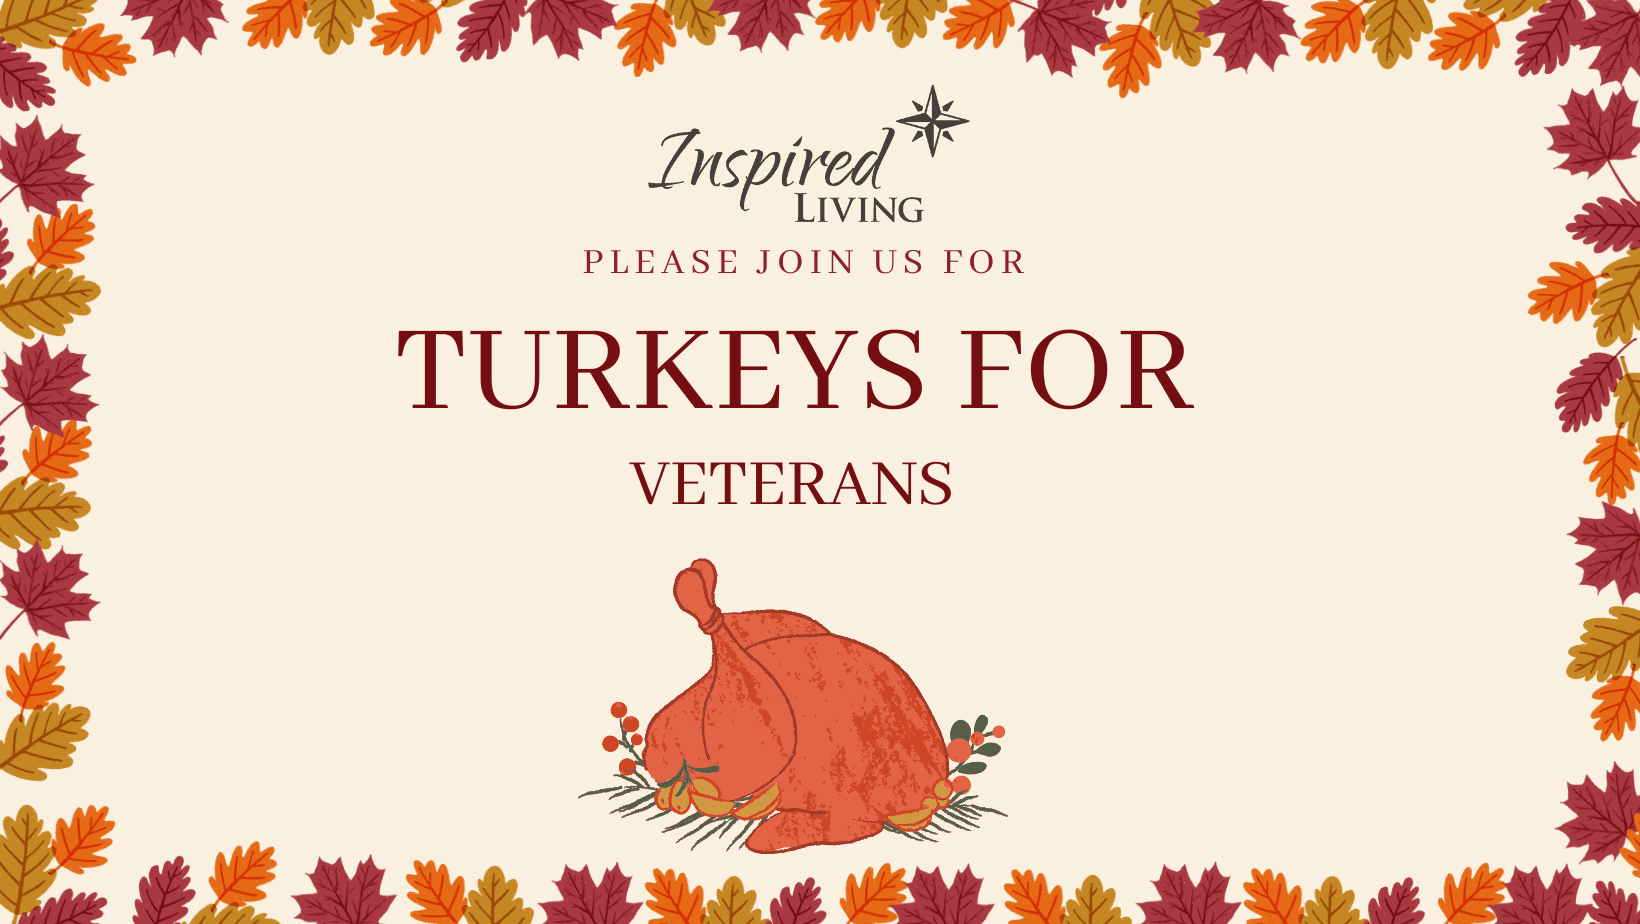 Turkeys for Veterans Facebook Cover